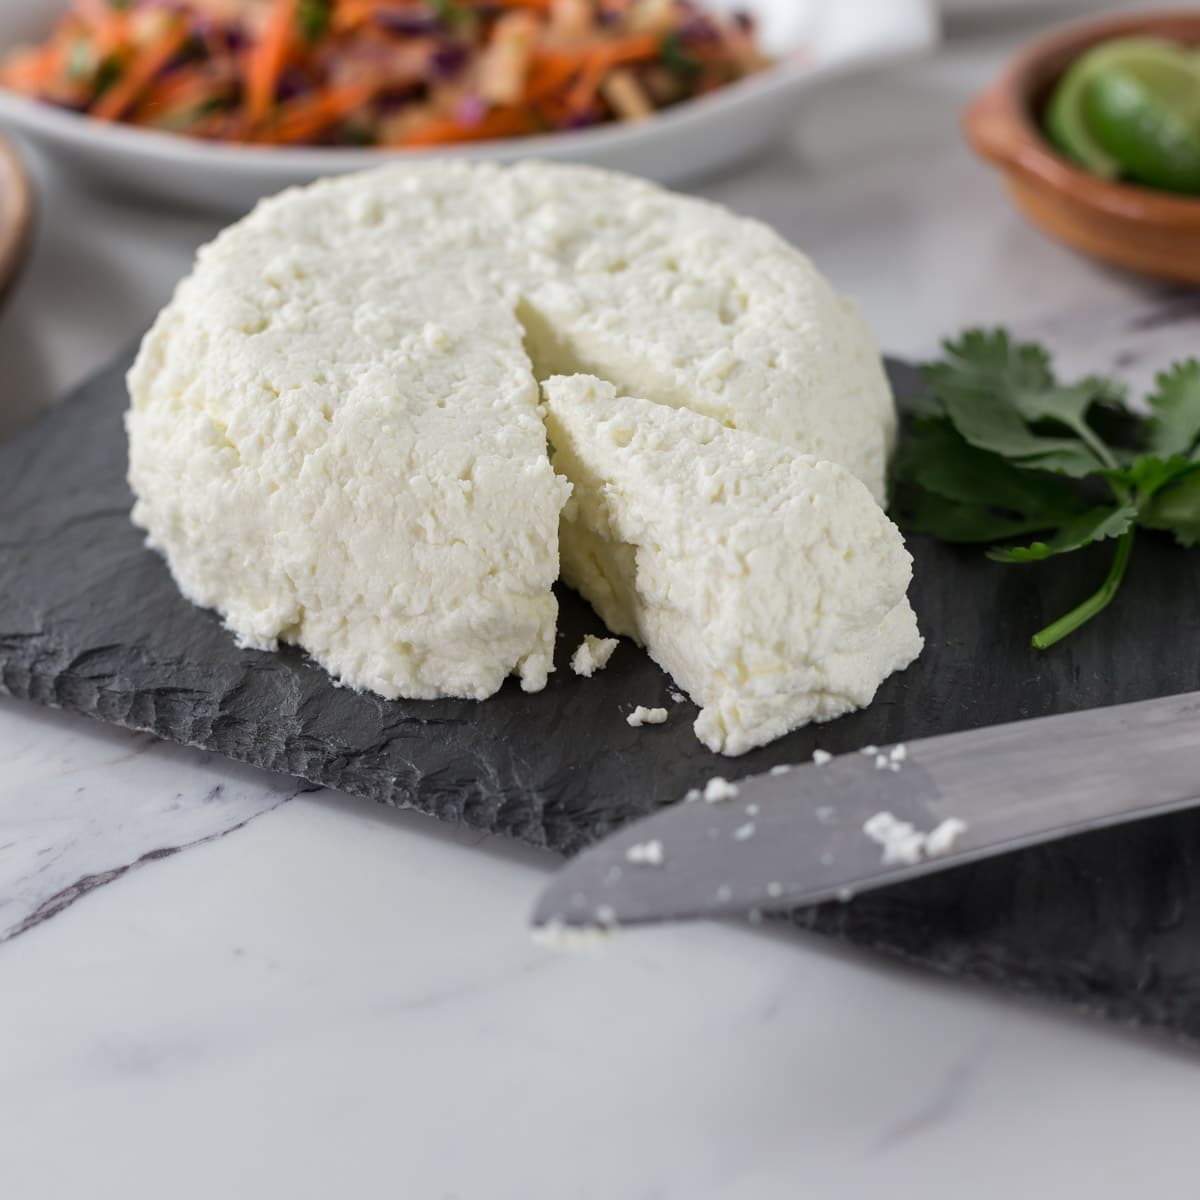 Queso Fresco Cheese Recipe - Hispanic Food Network